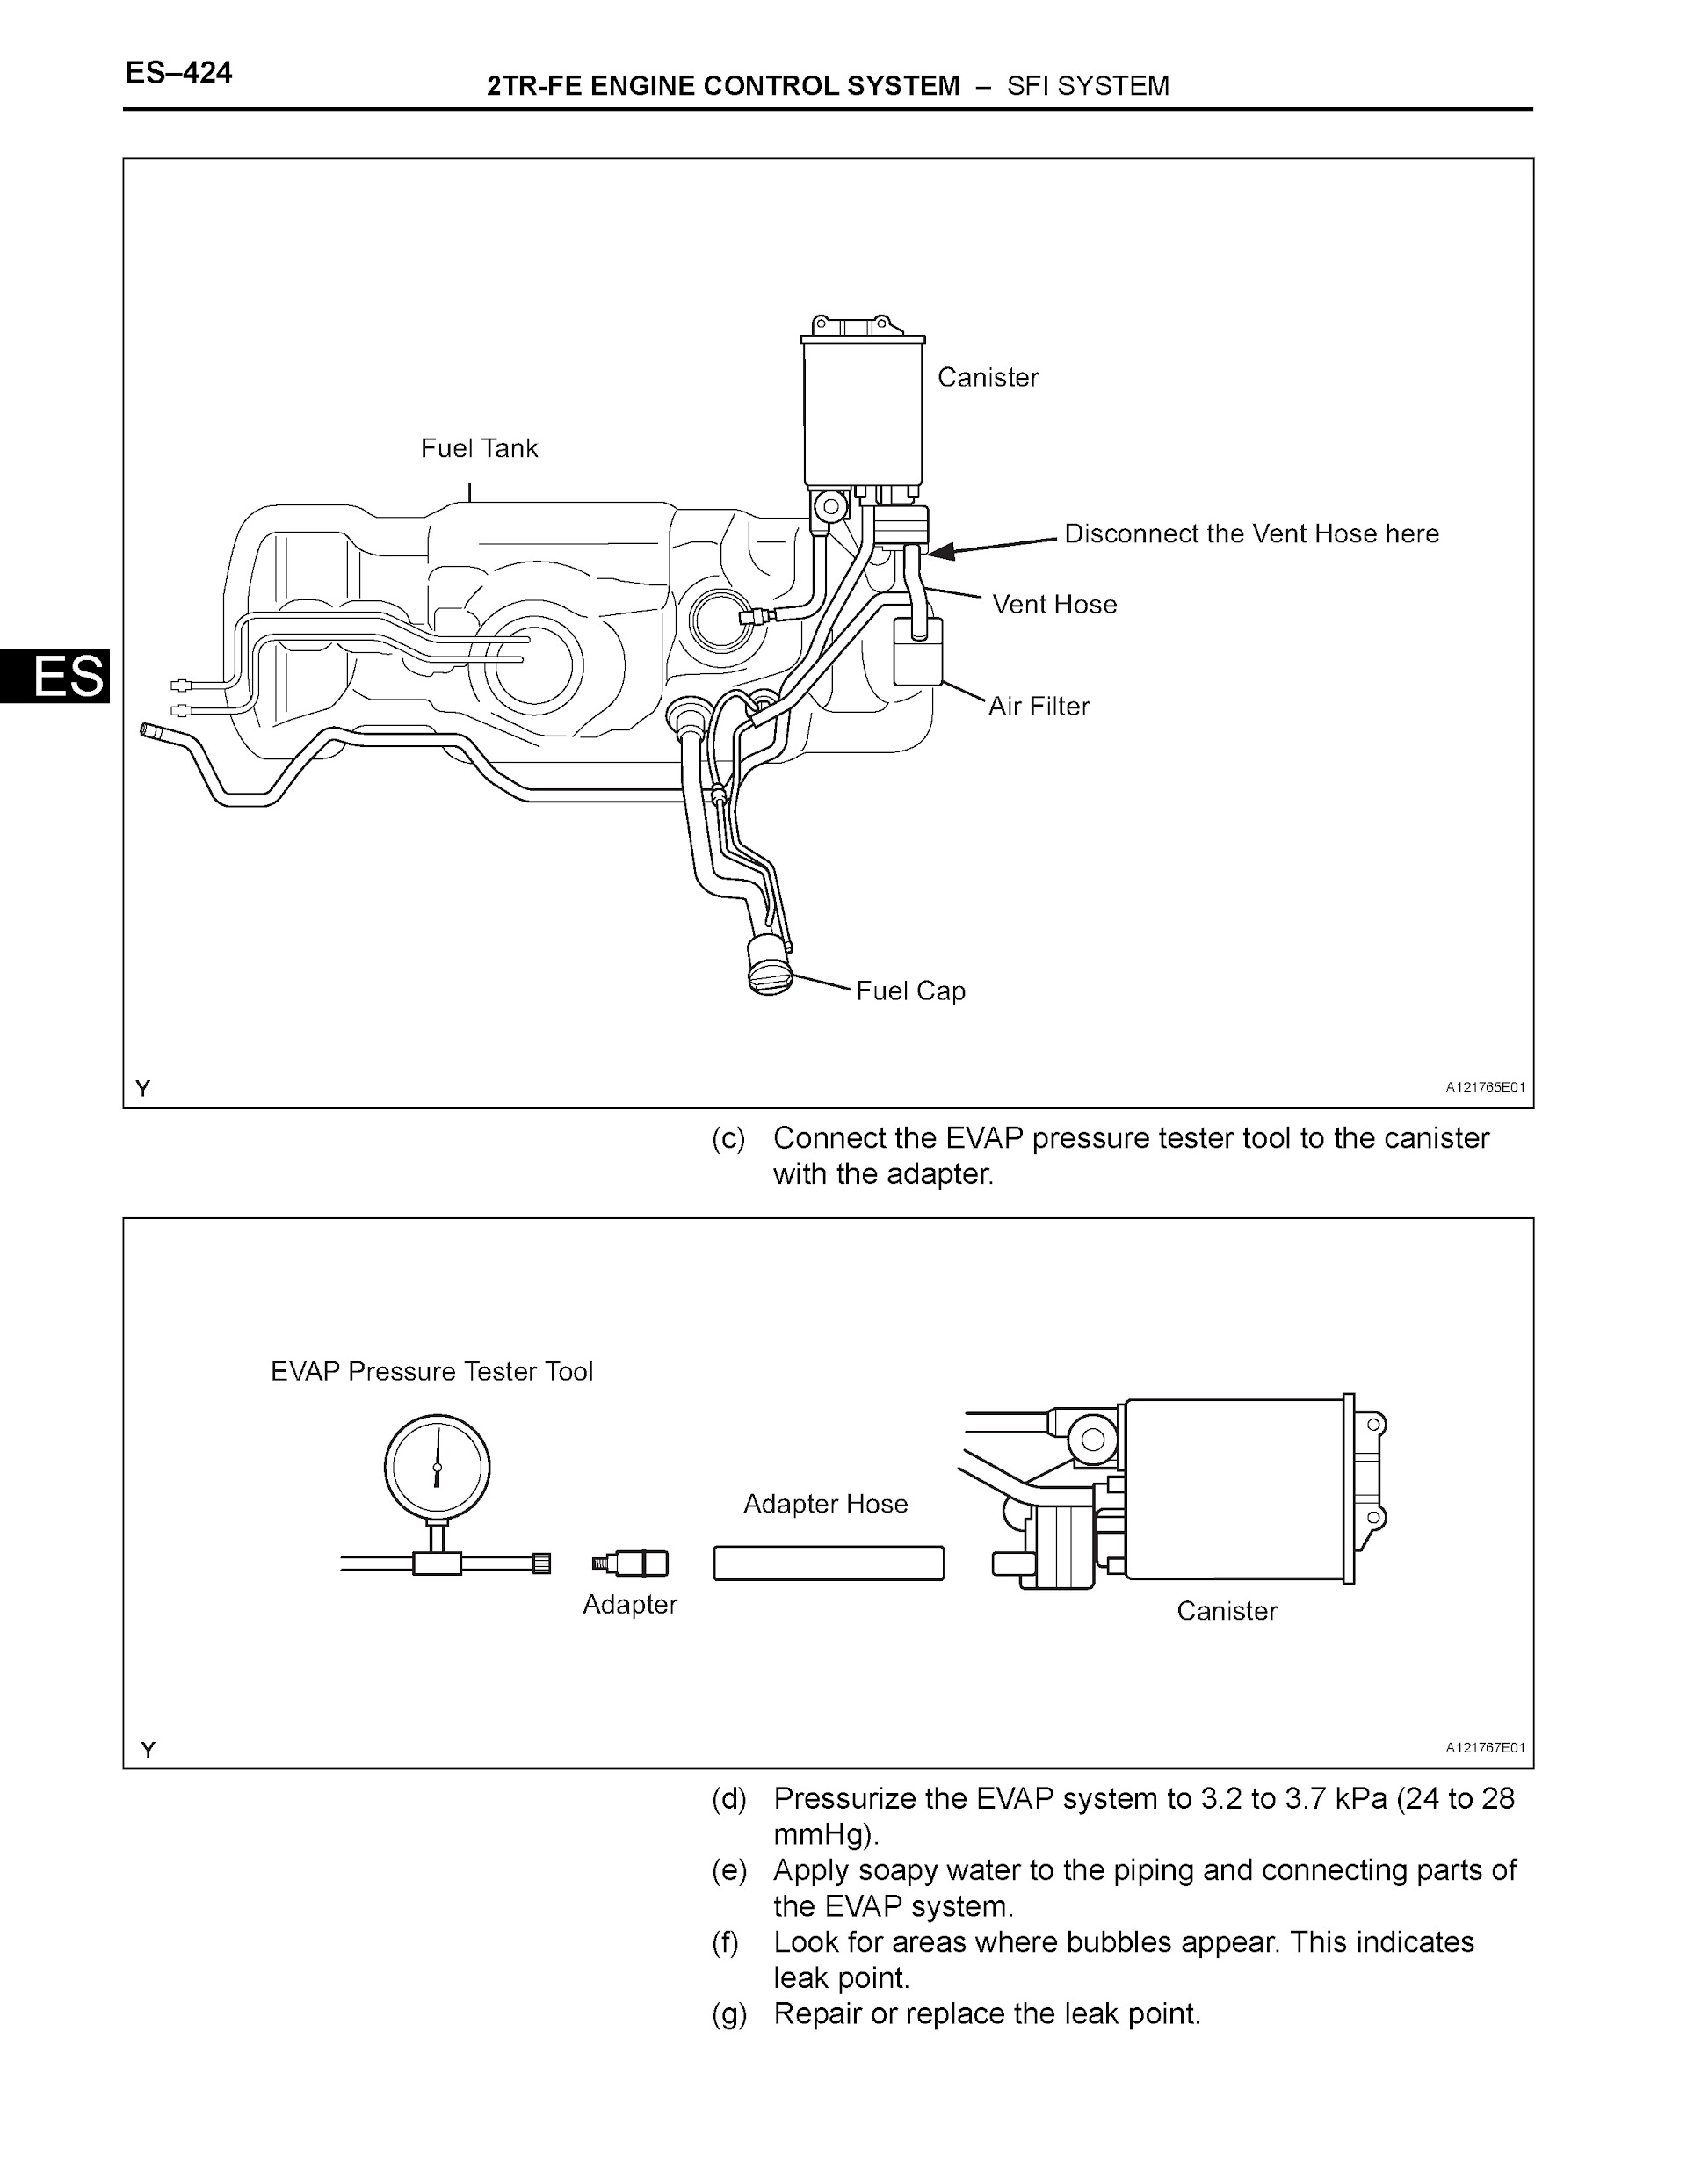 2008 Toyota Tacoma Repair Manual, 2TR-FE Engine Control System